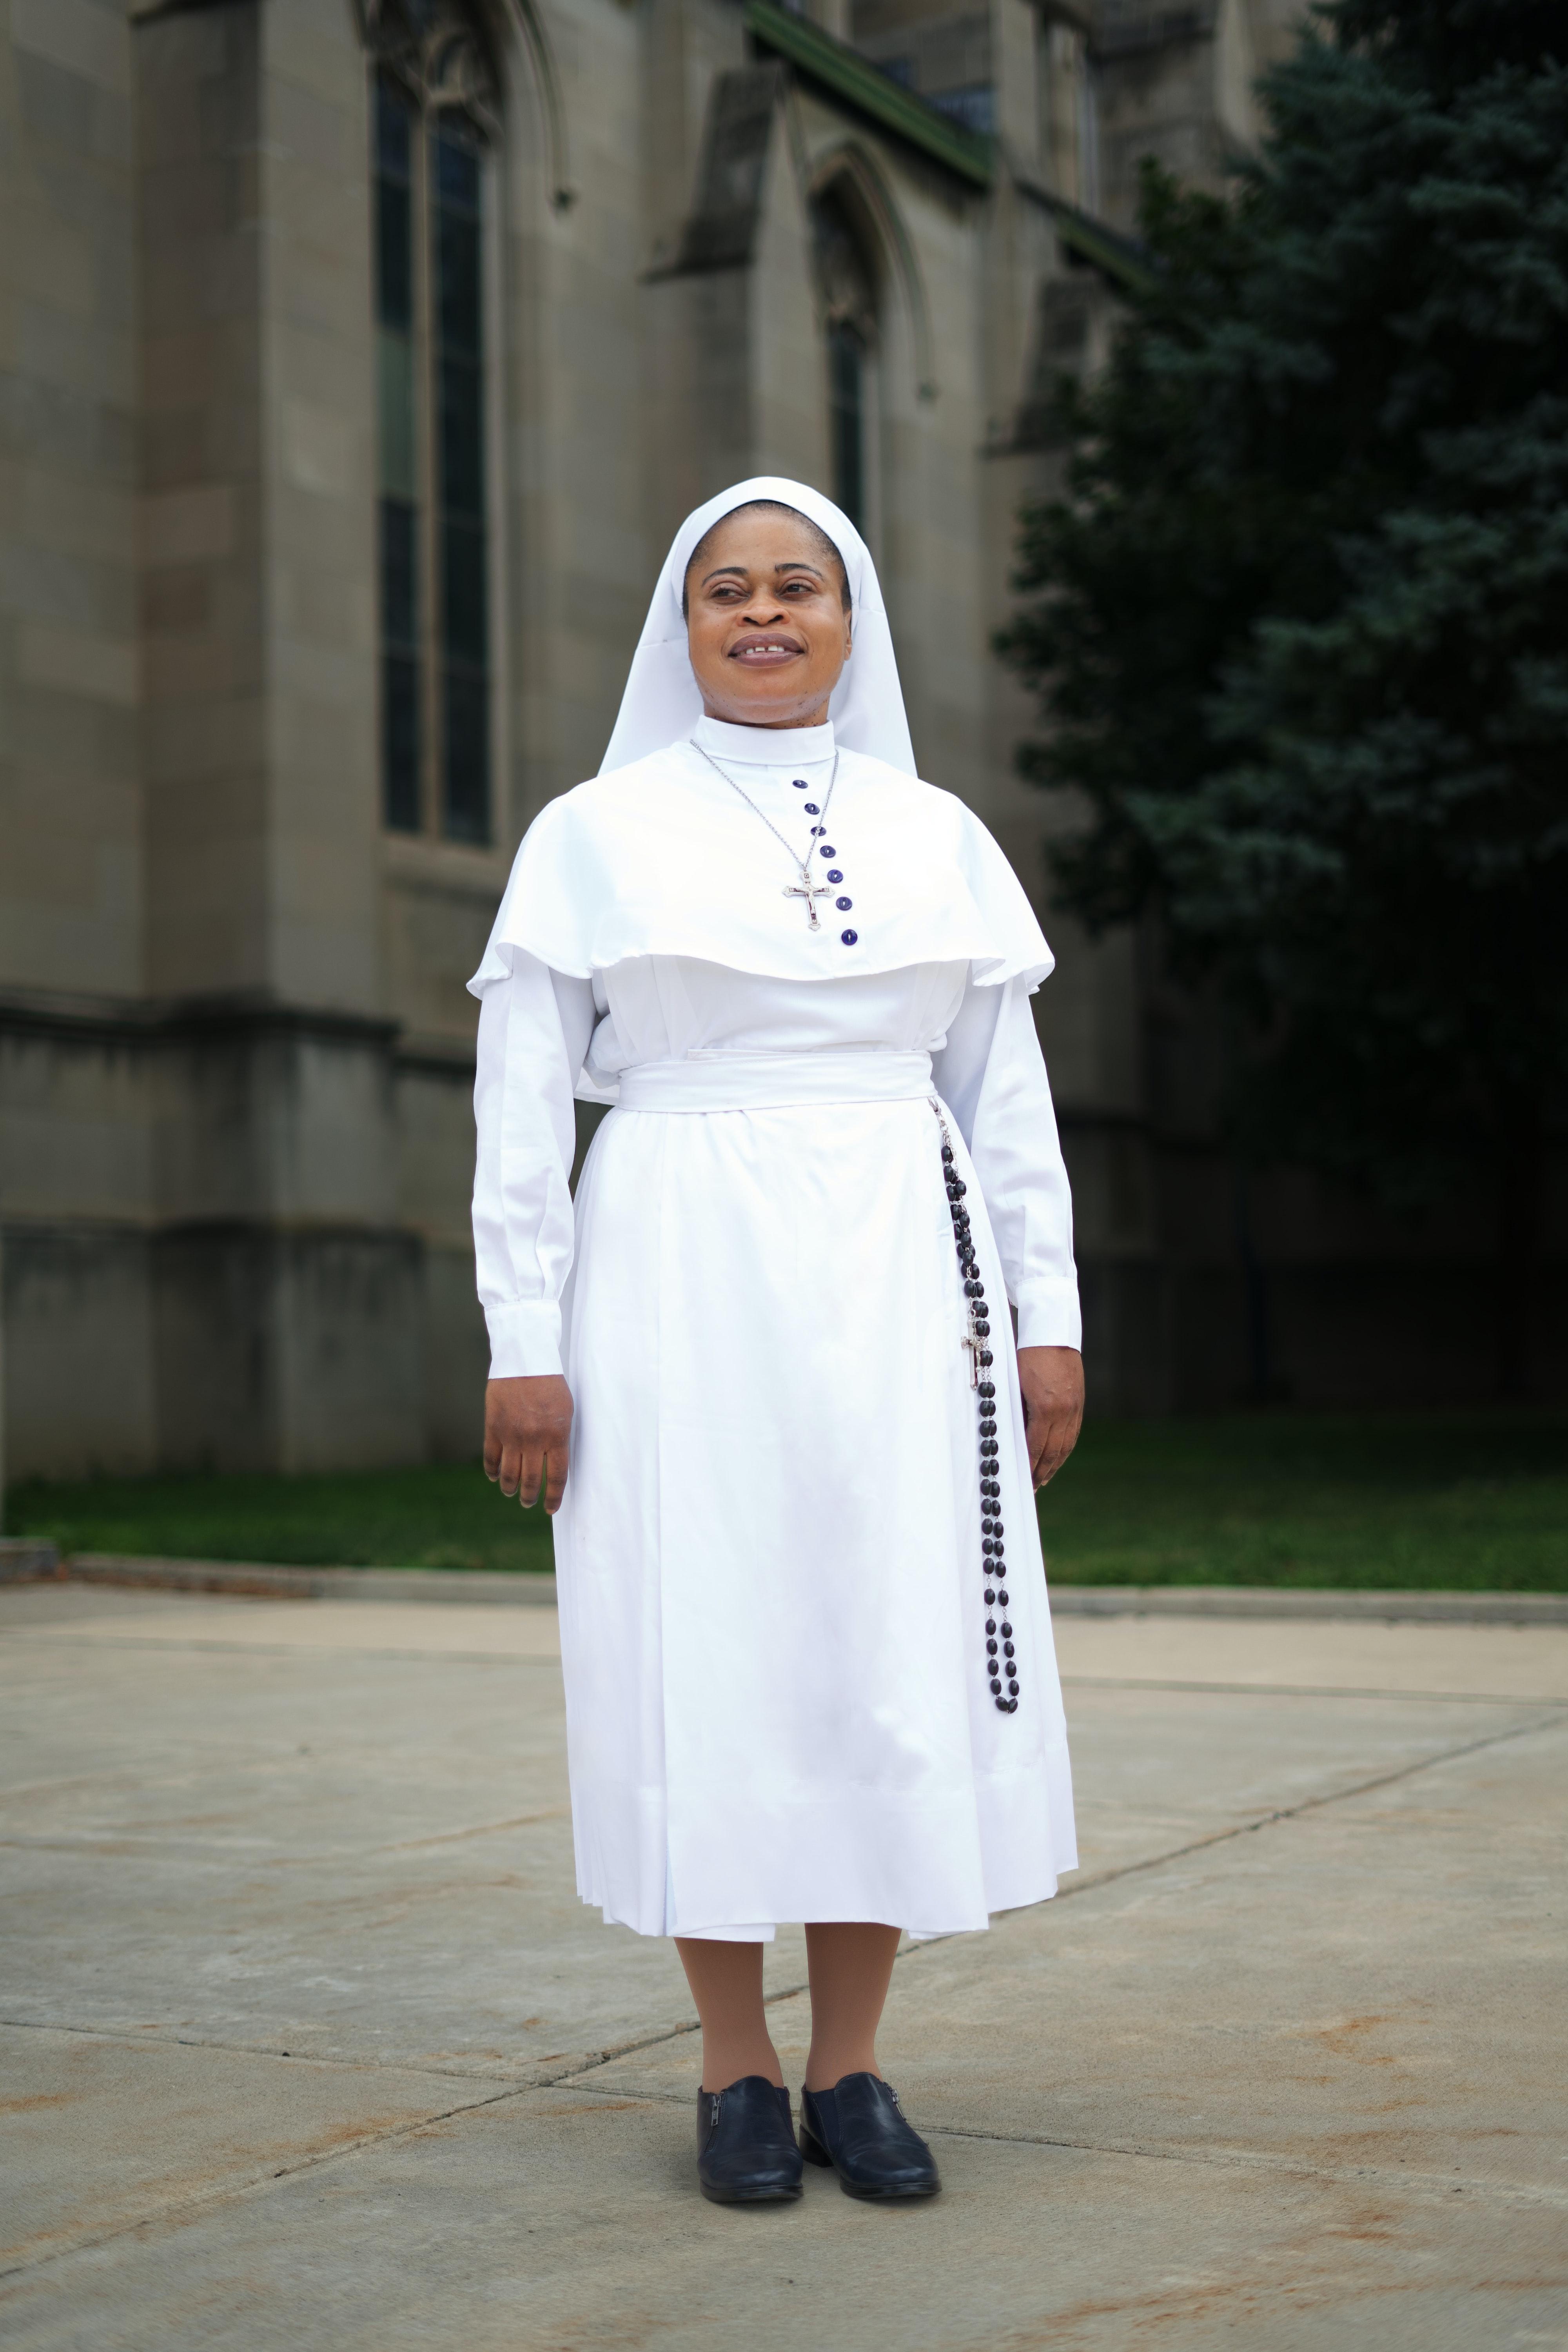 Why do nuns wear all white? 